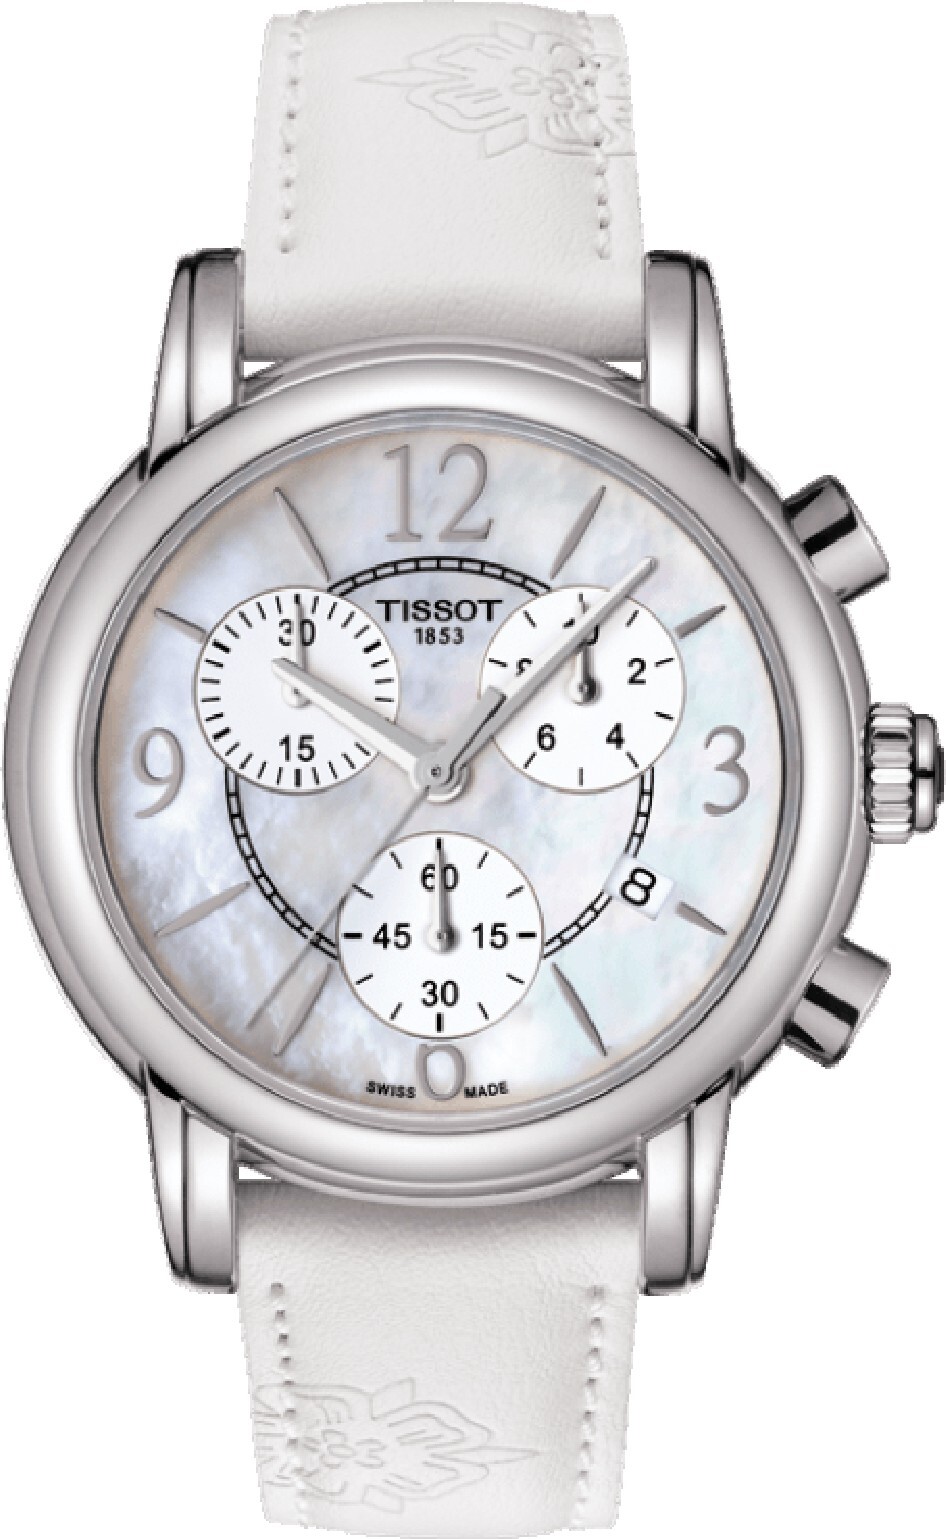 Đồng hồ nữ Tissot T050.217.17.117.00